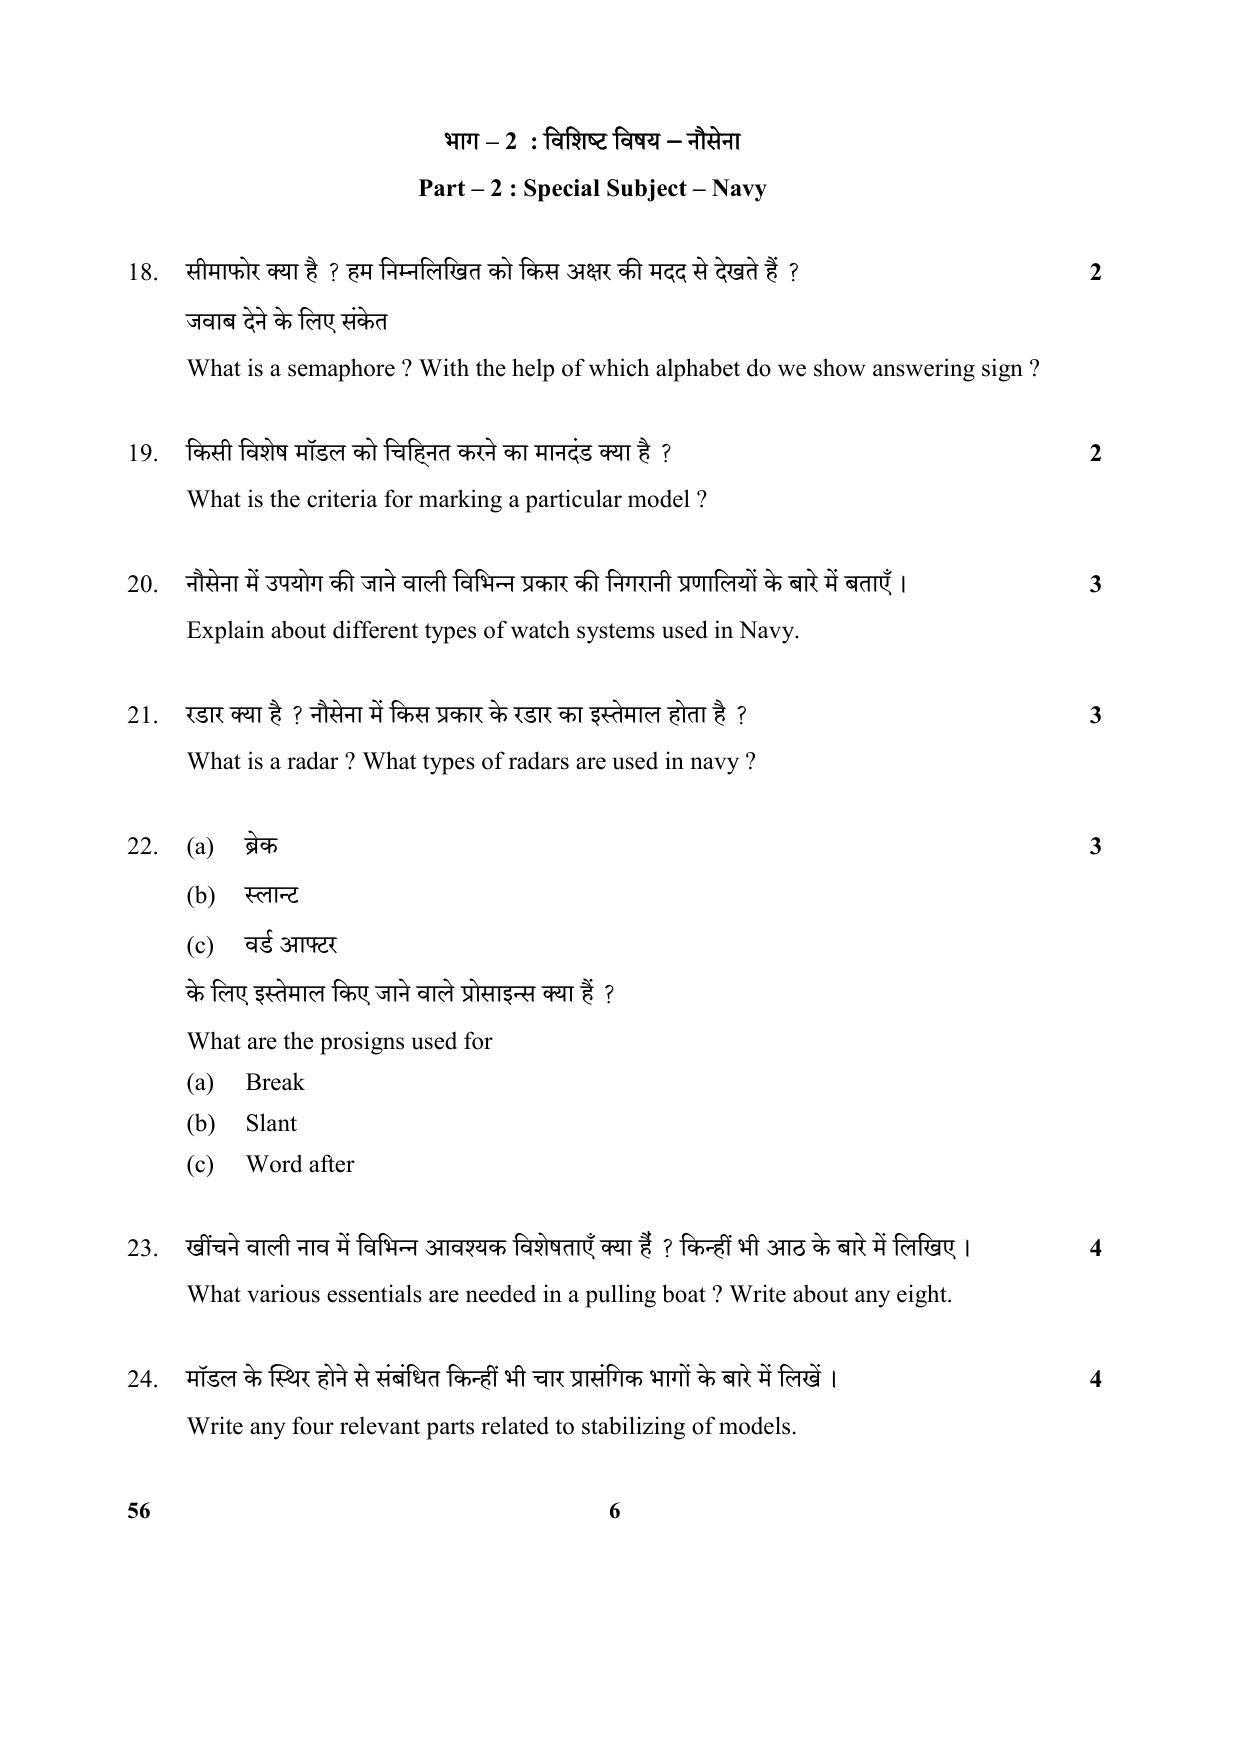 CBSE Class 10 56 (NCC) 2018 Question Paper - Page 6